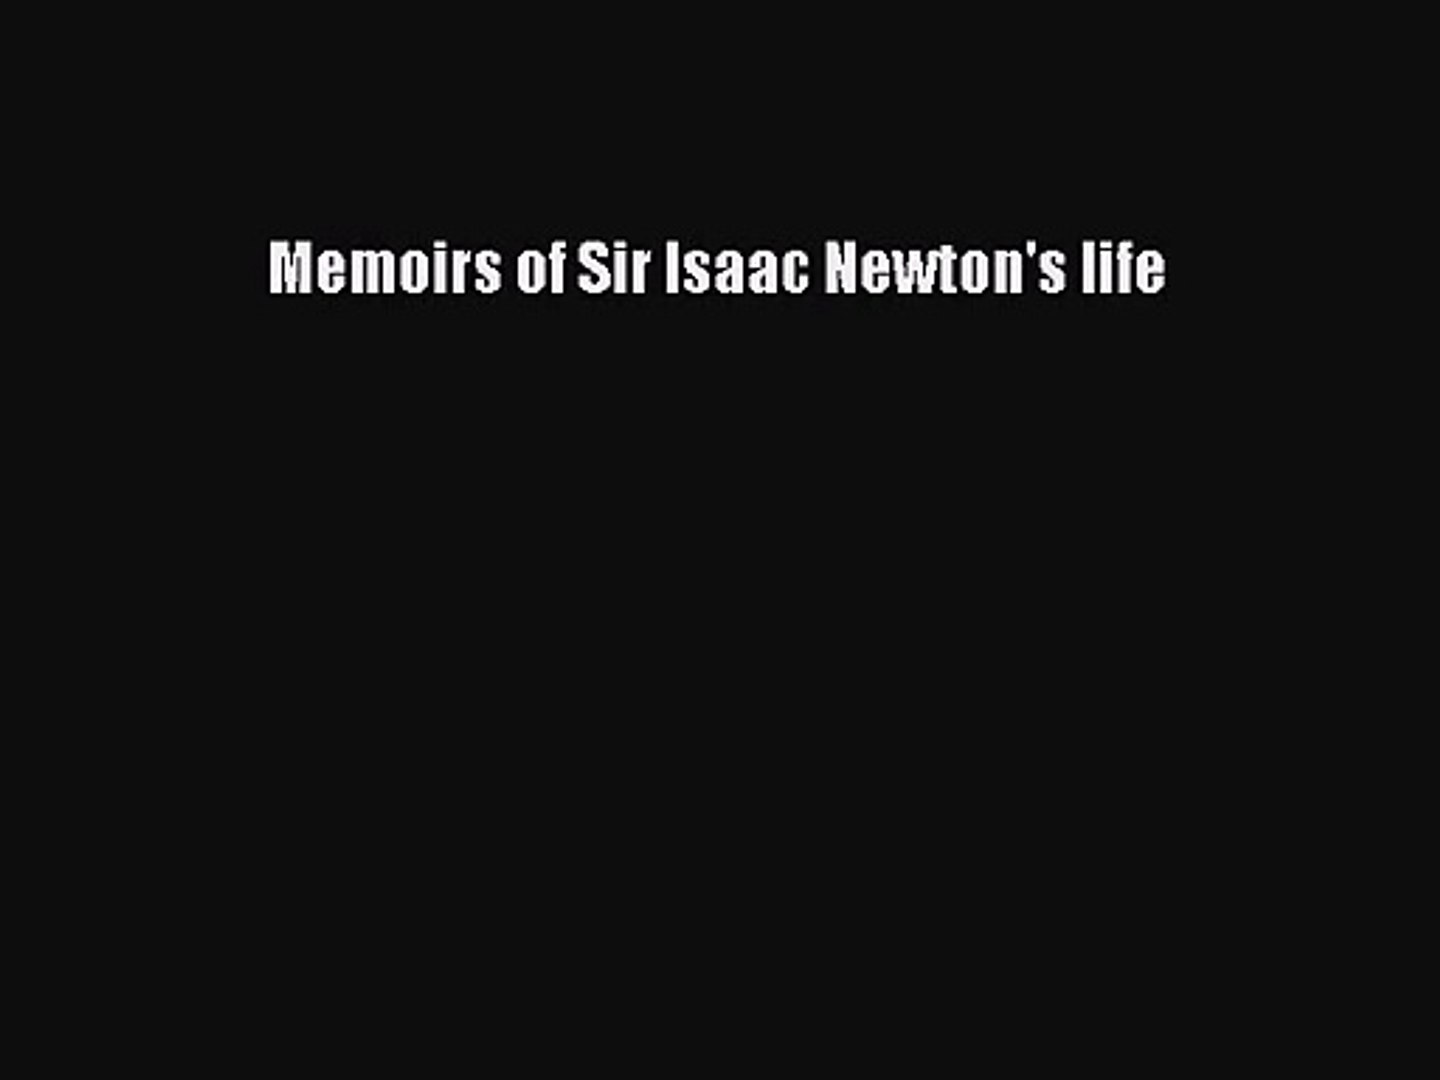 PDF Download] Memoirs of Sir Isaac Newton's life [Download] Full ...